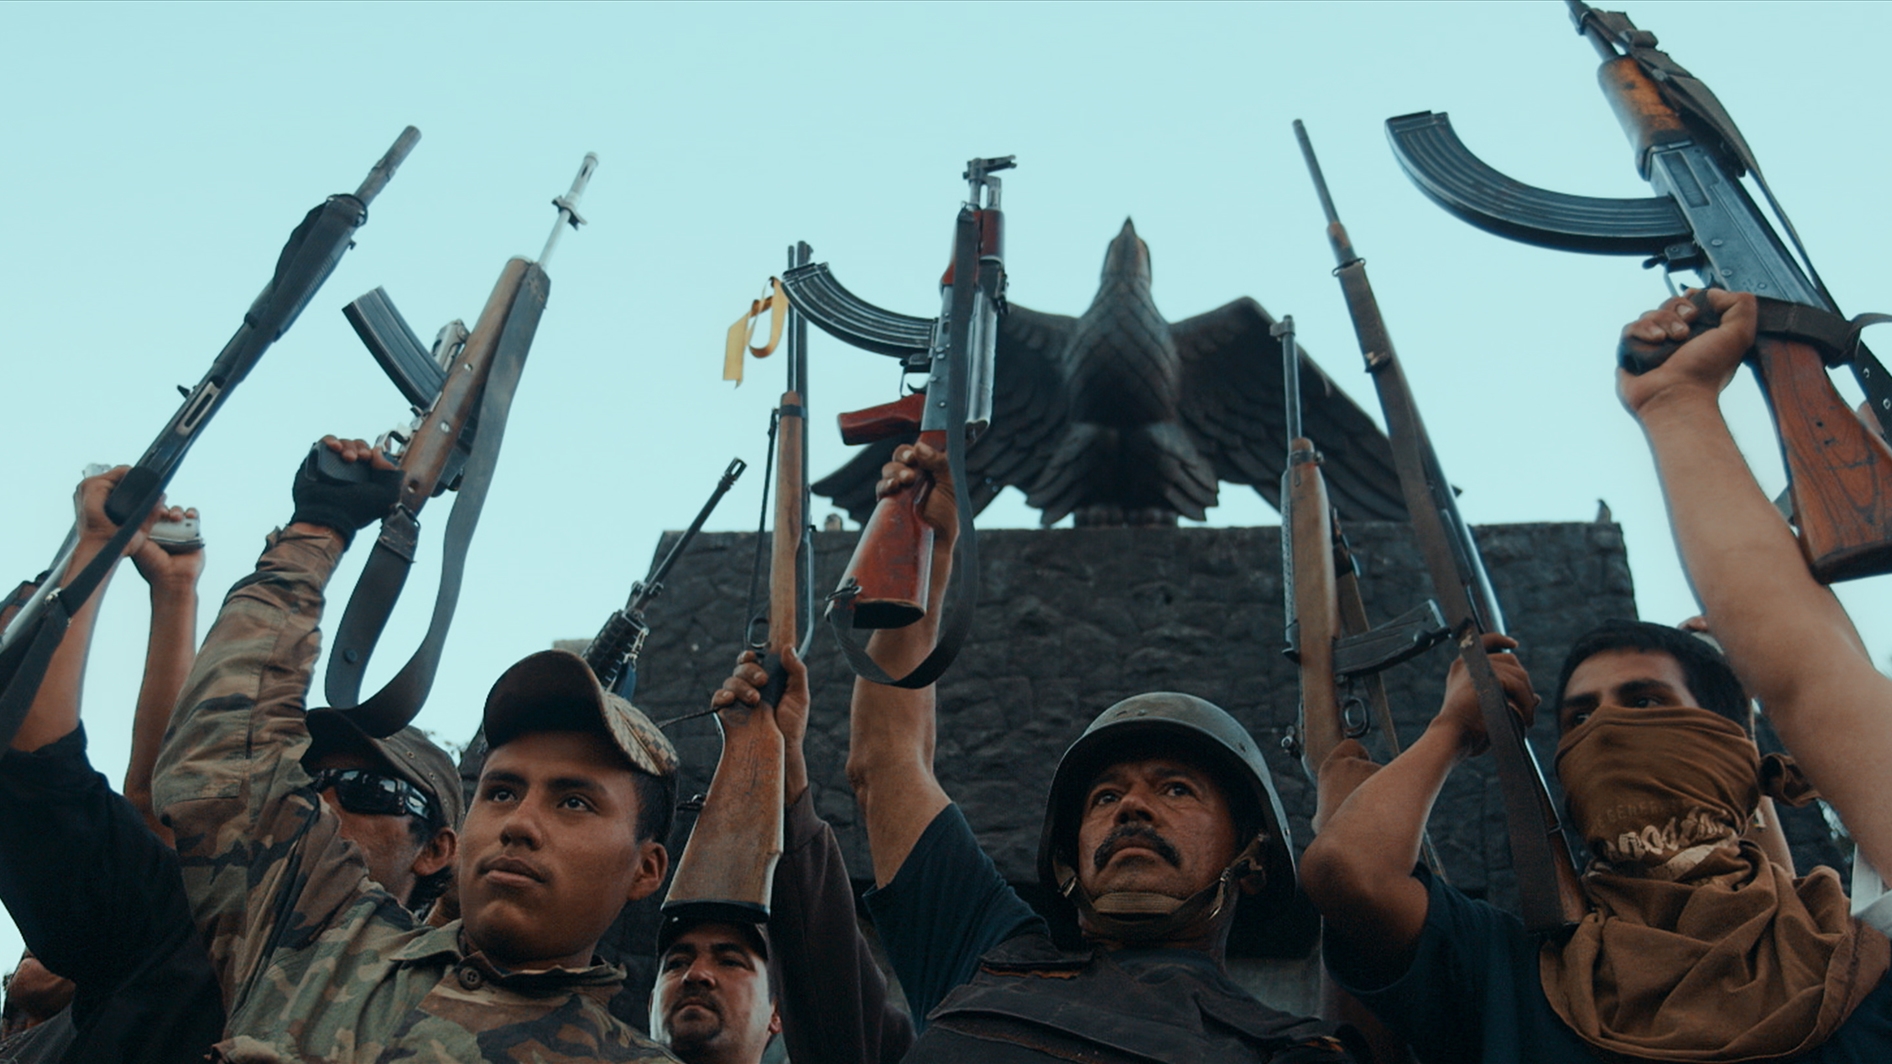 #6 - Autodefensa members in Michoacán, Mexico, from CARTEL LAND, a film by Matthew Heineman.jpg